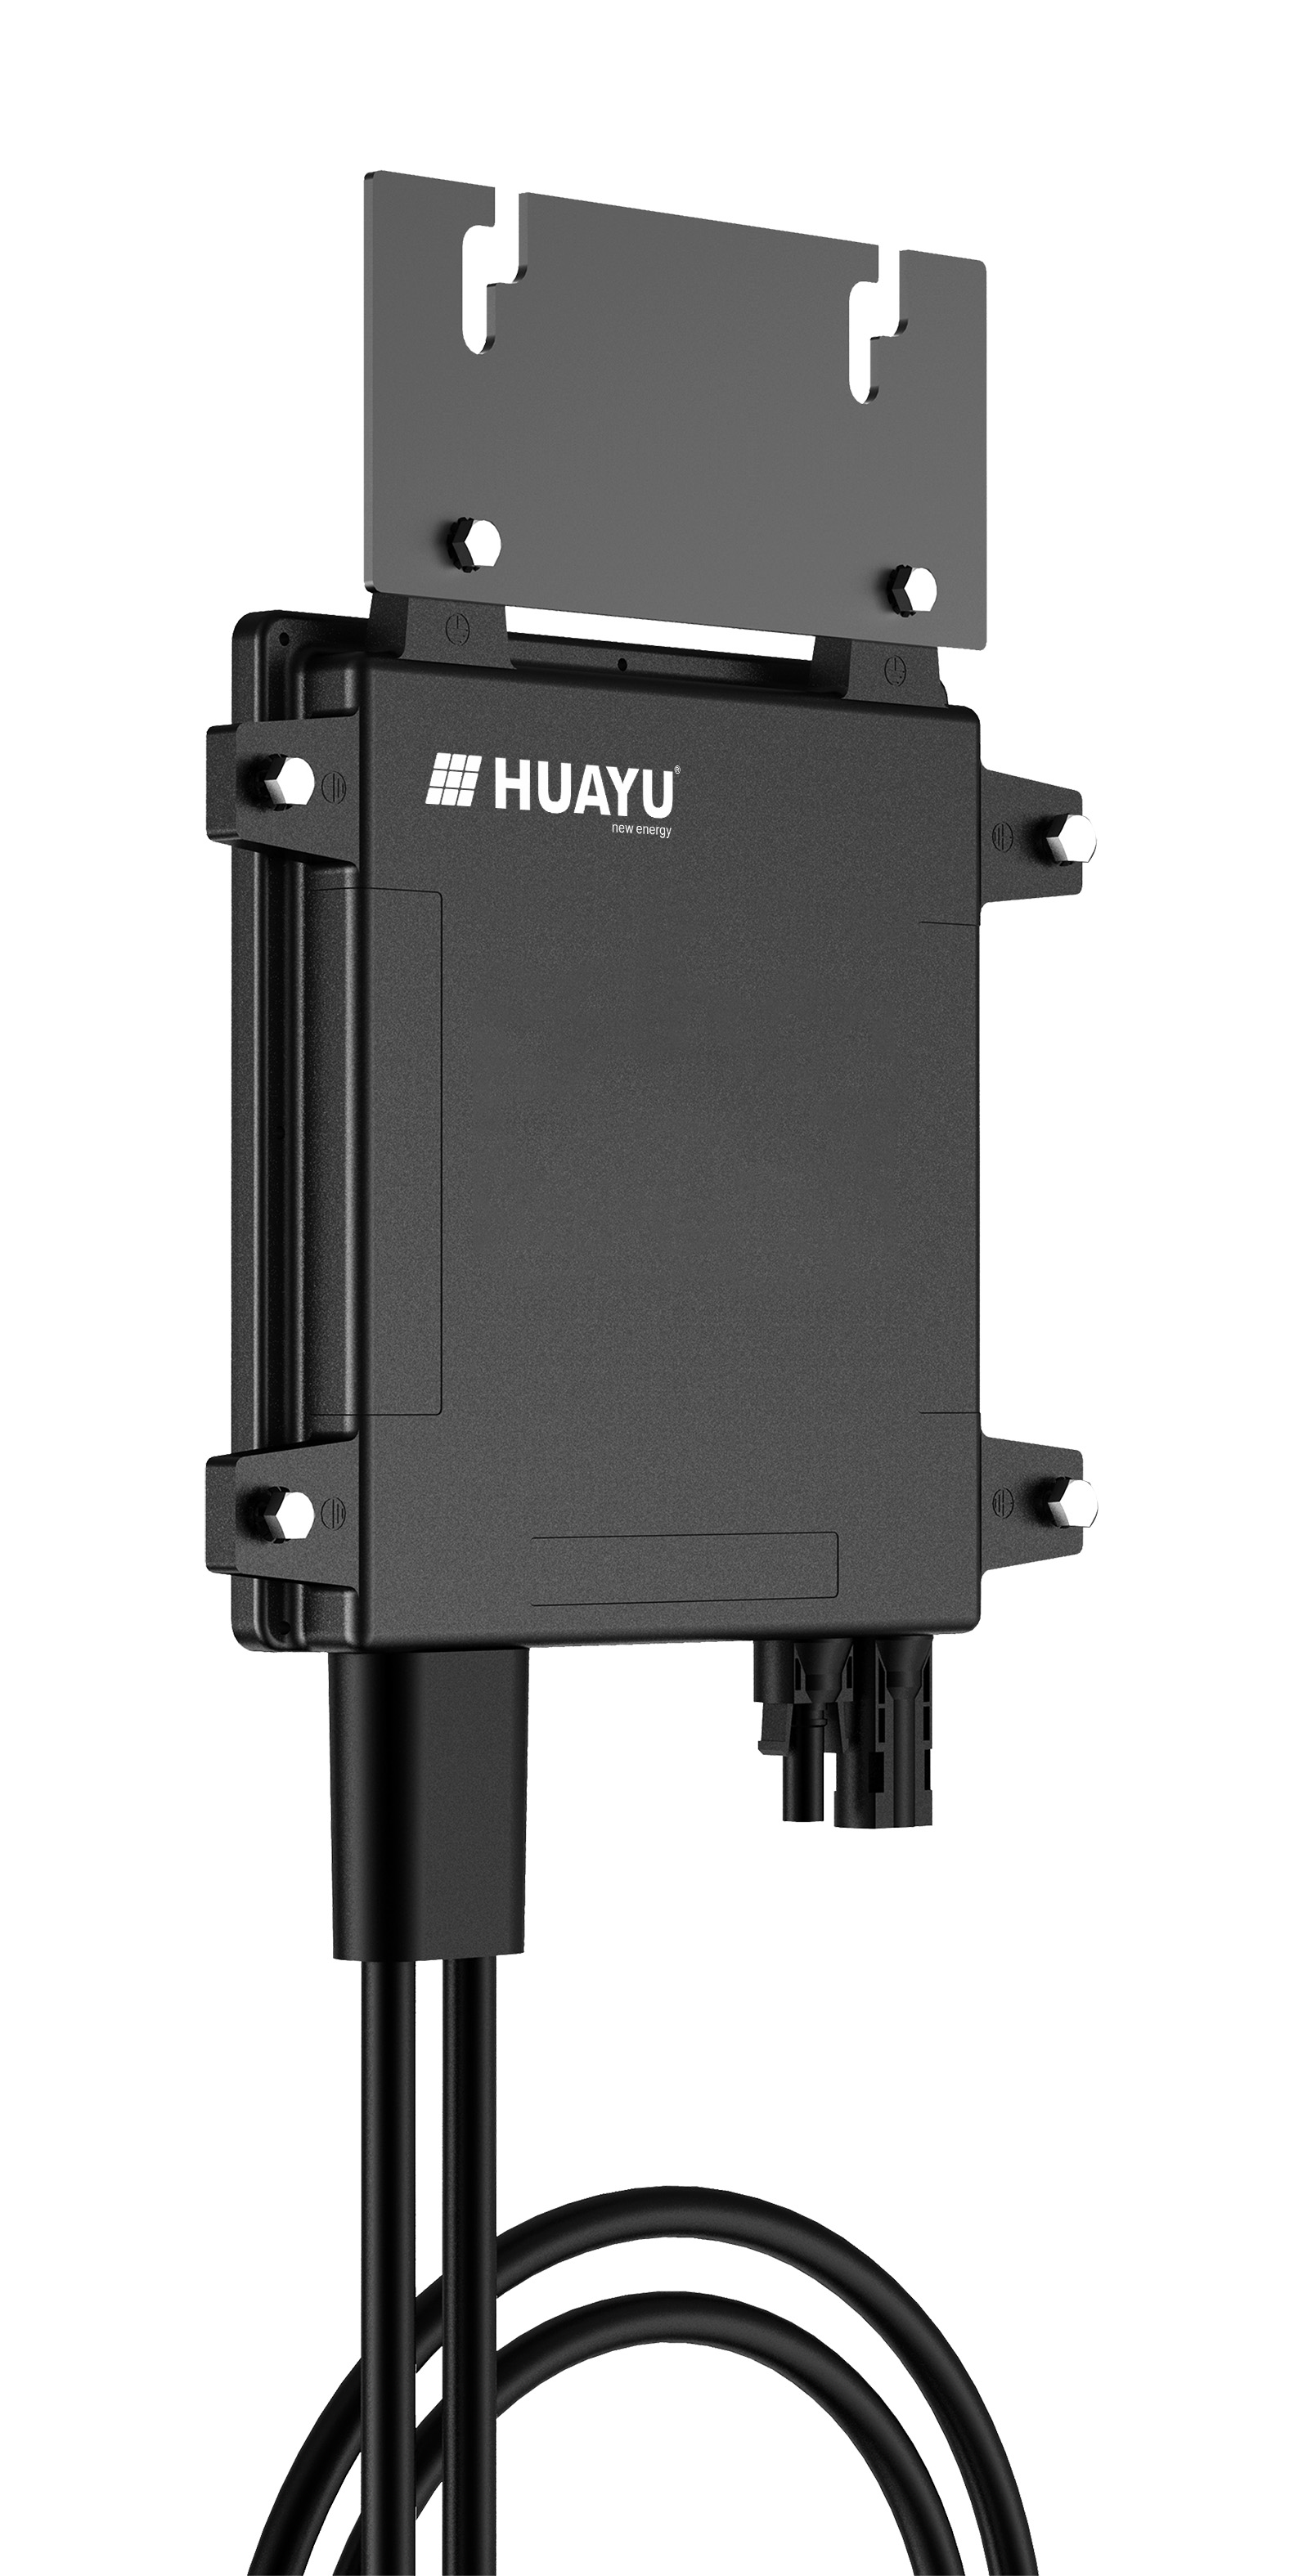 Huayu HY-400-Plus Wechselrichter